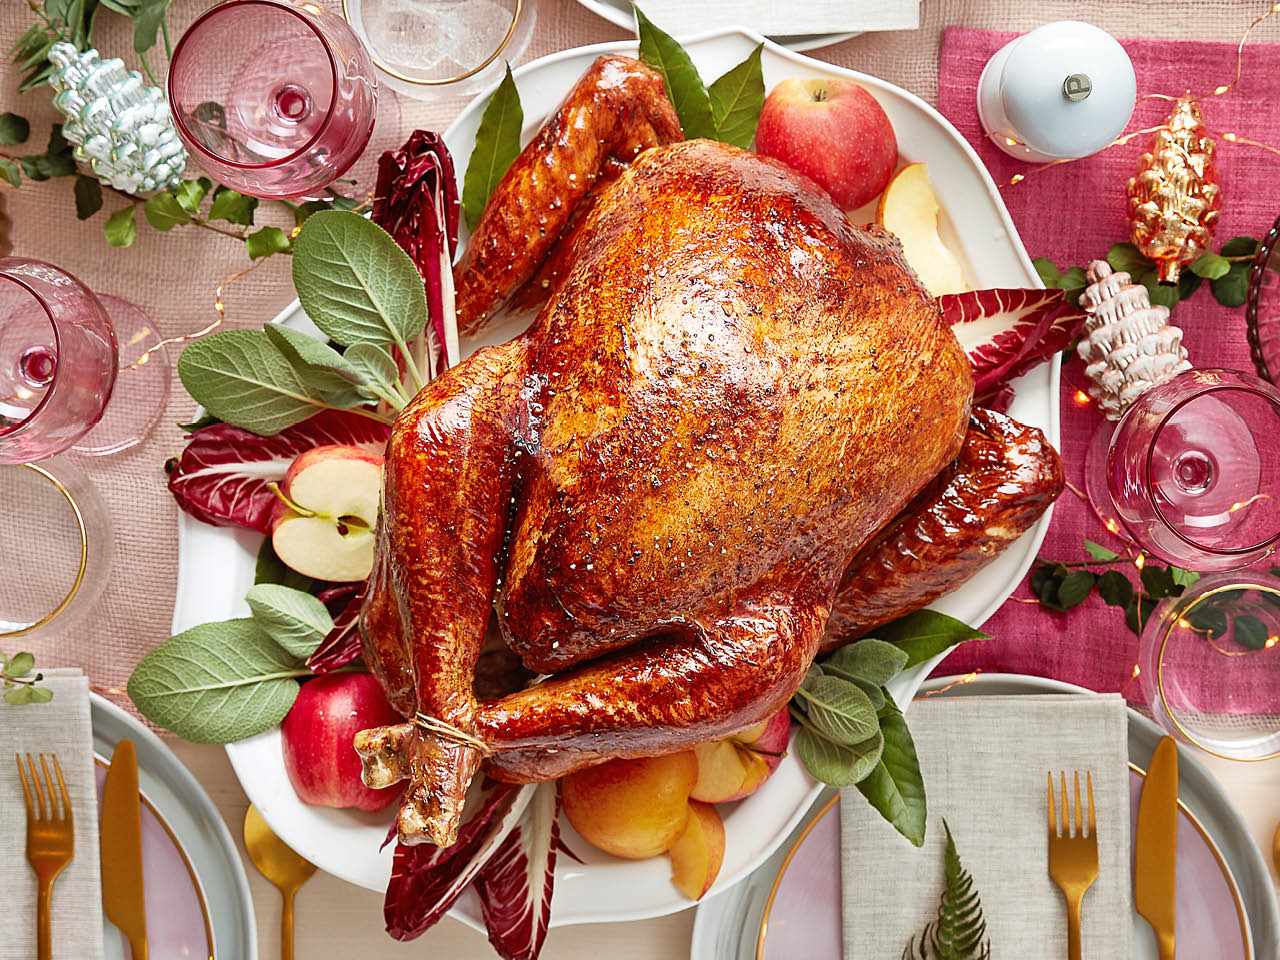 Best turkey recipes: Roast turkey on a bed of salad